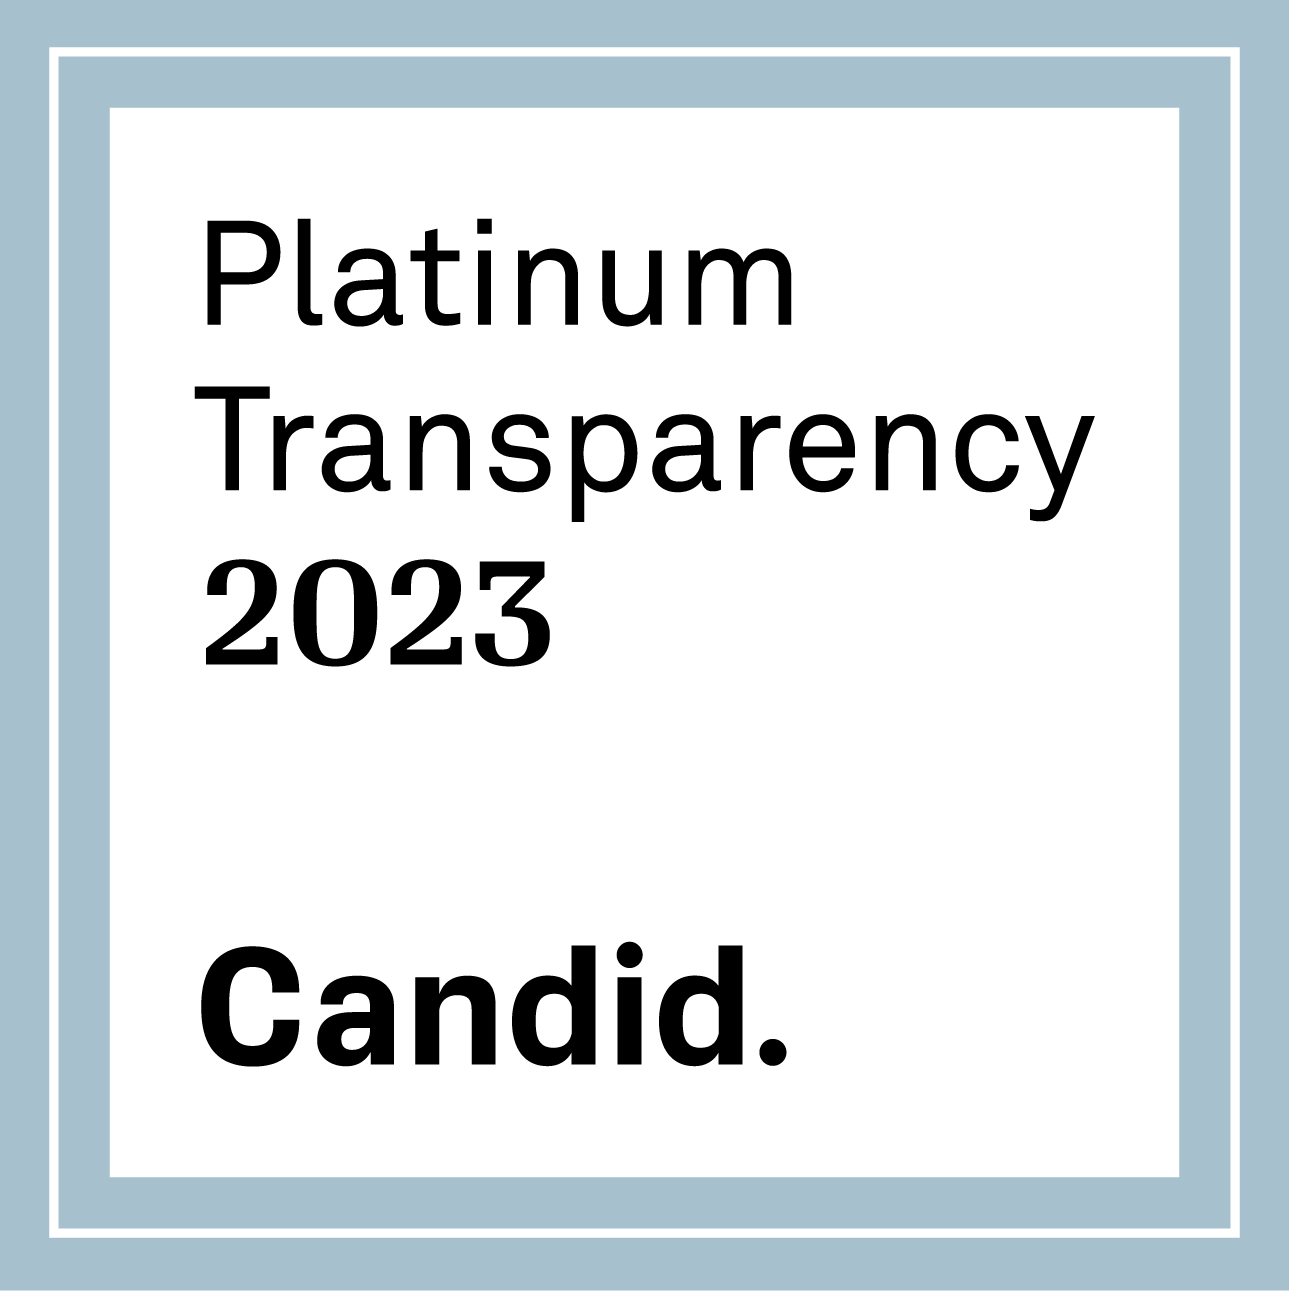 Platinum Transparency 2023 Candid.